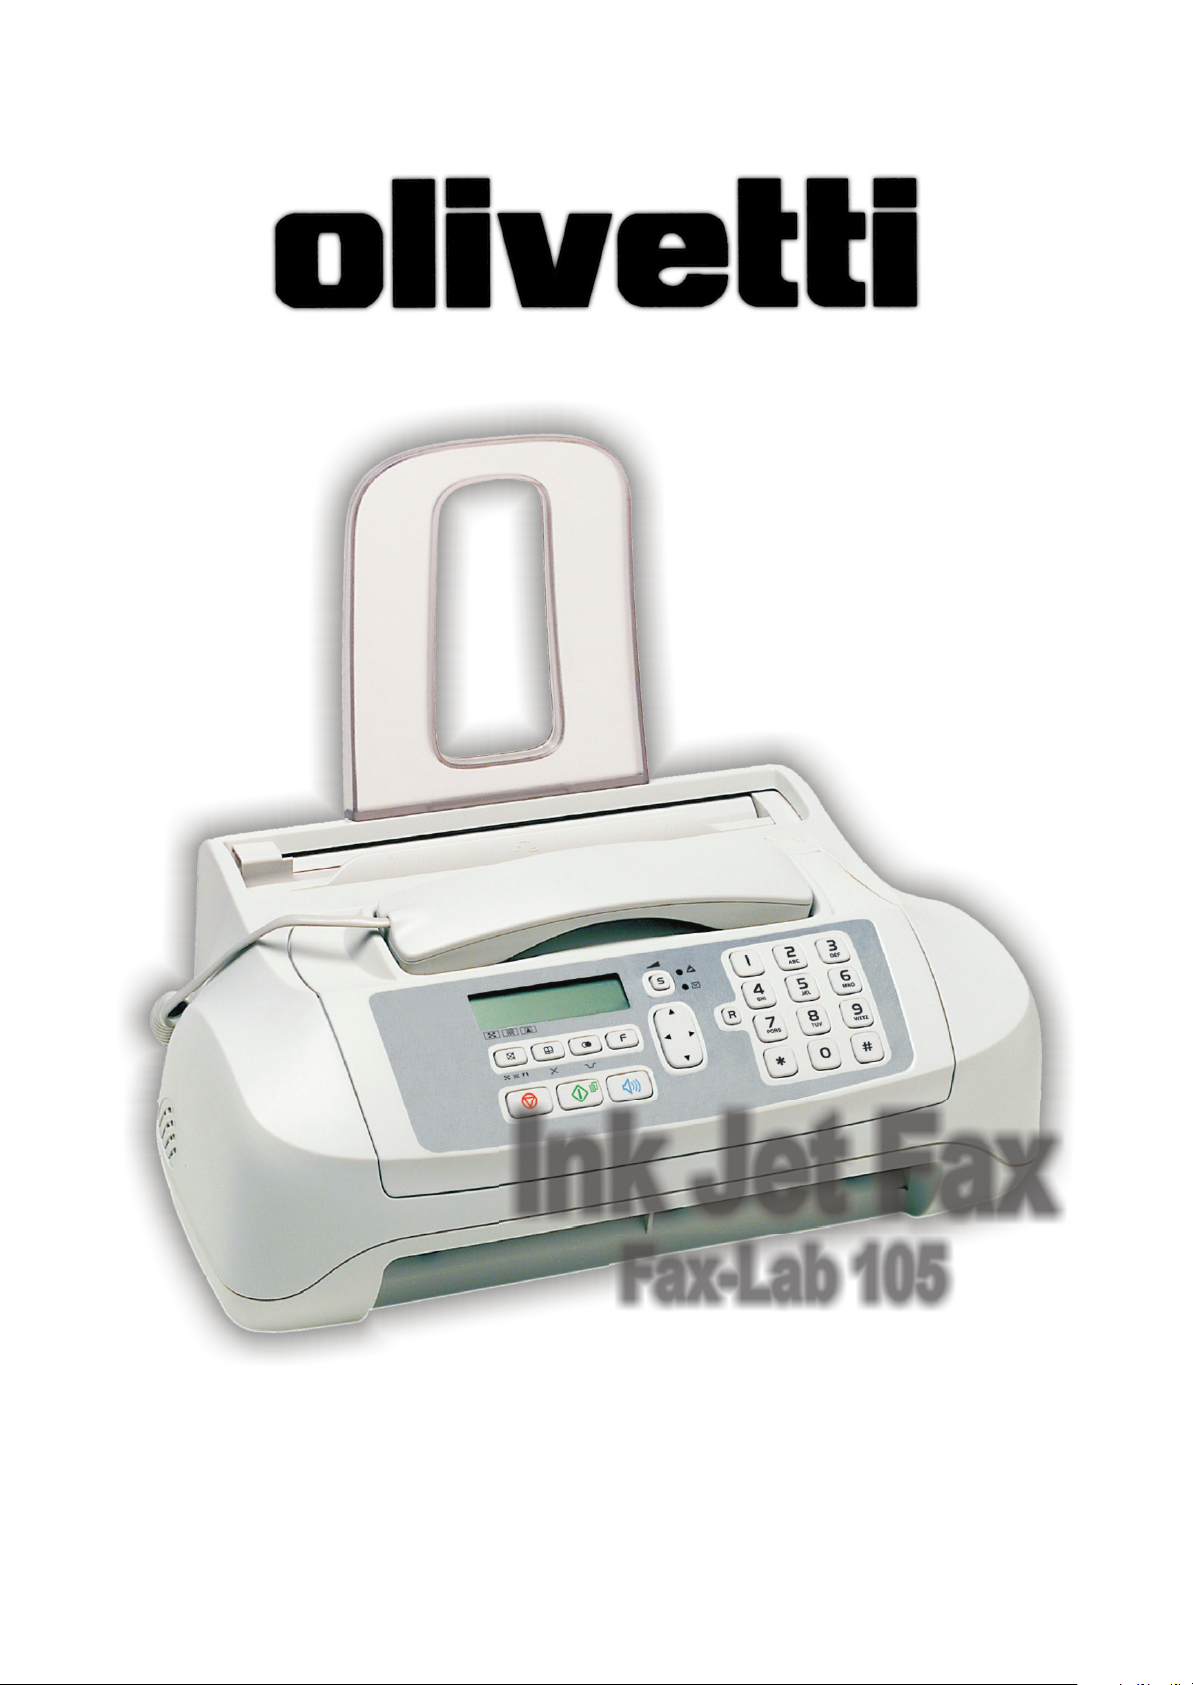 Fax-Lab 105